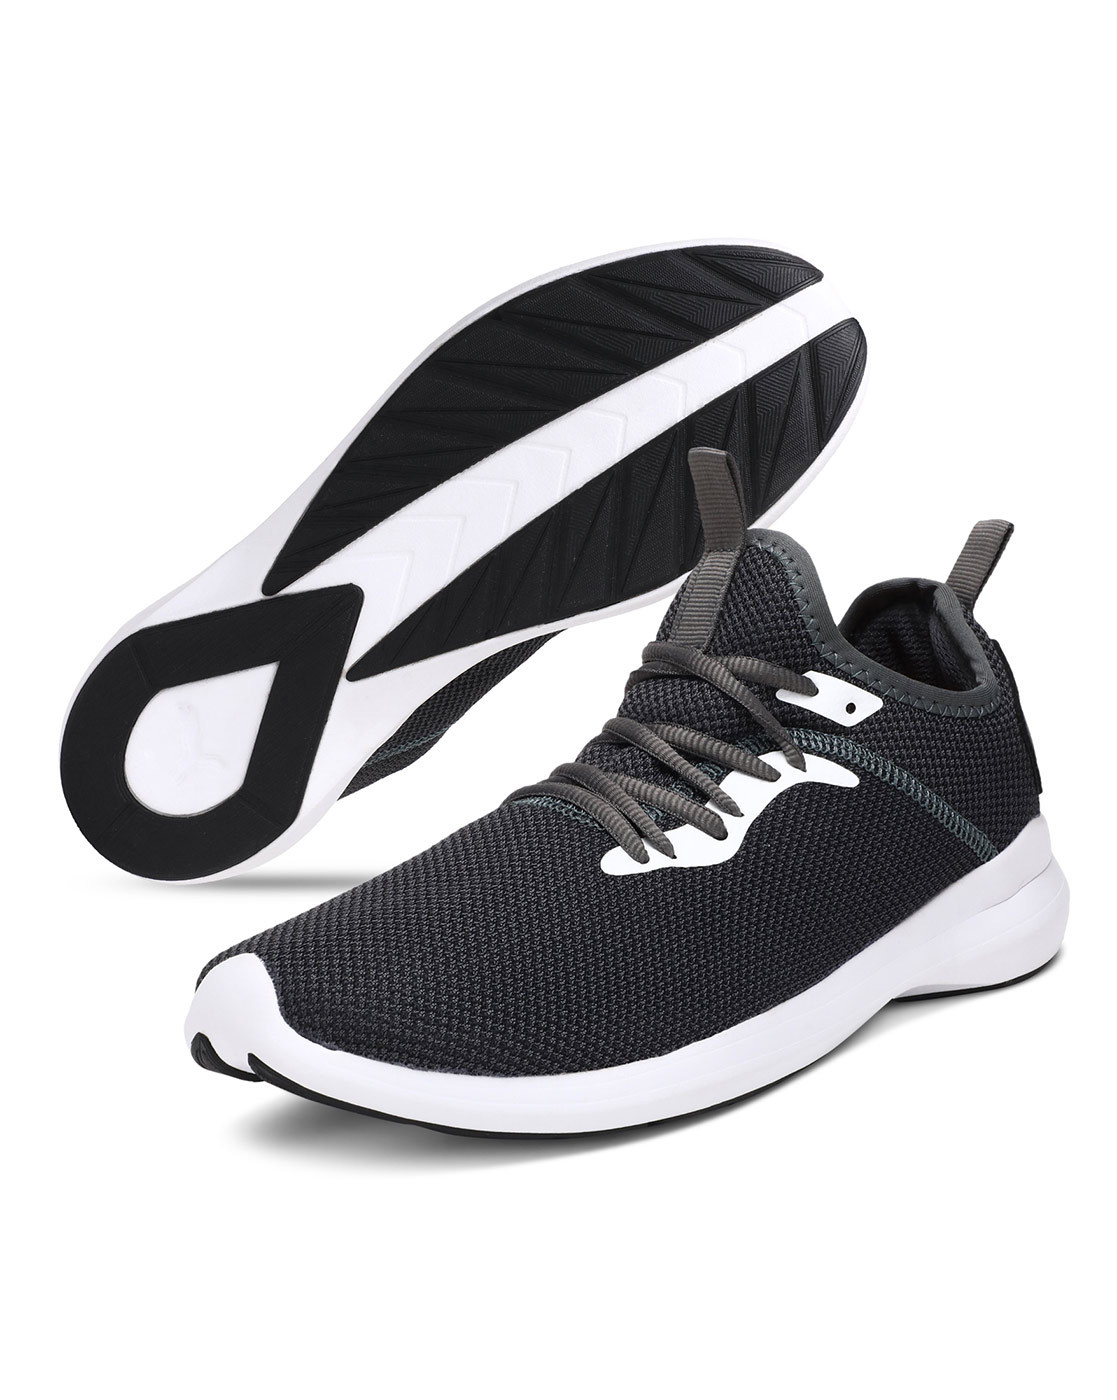 puma grey sports shoes